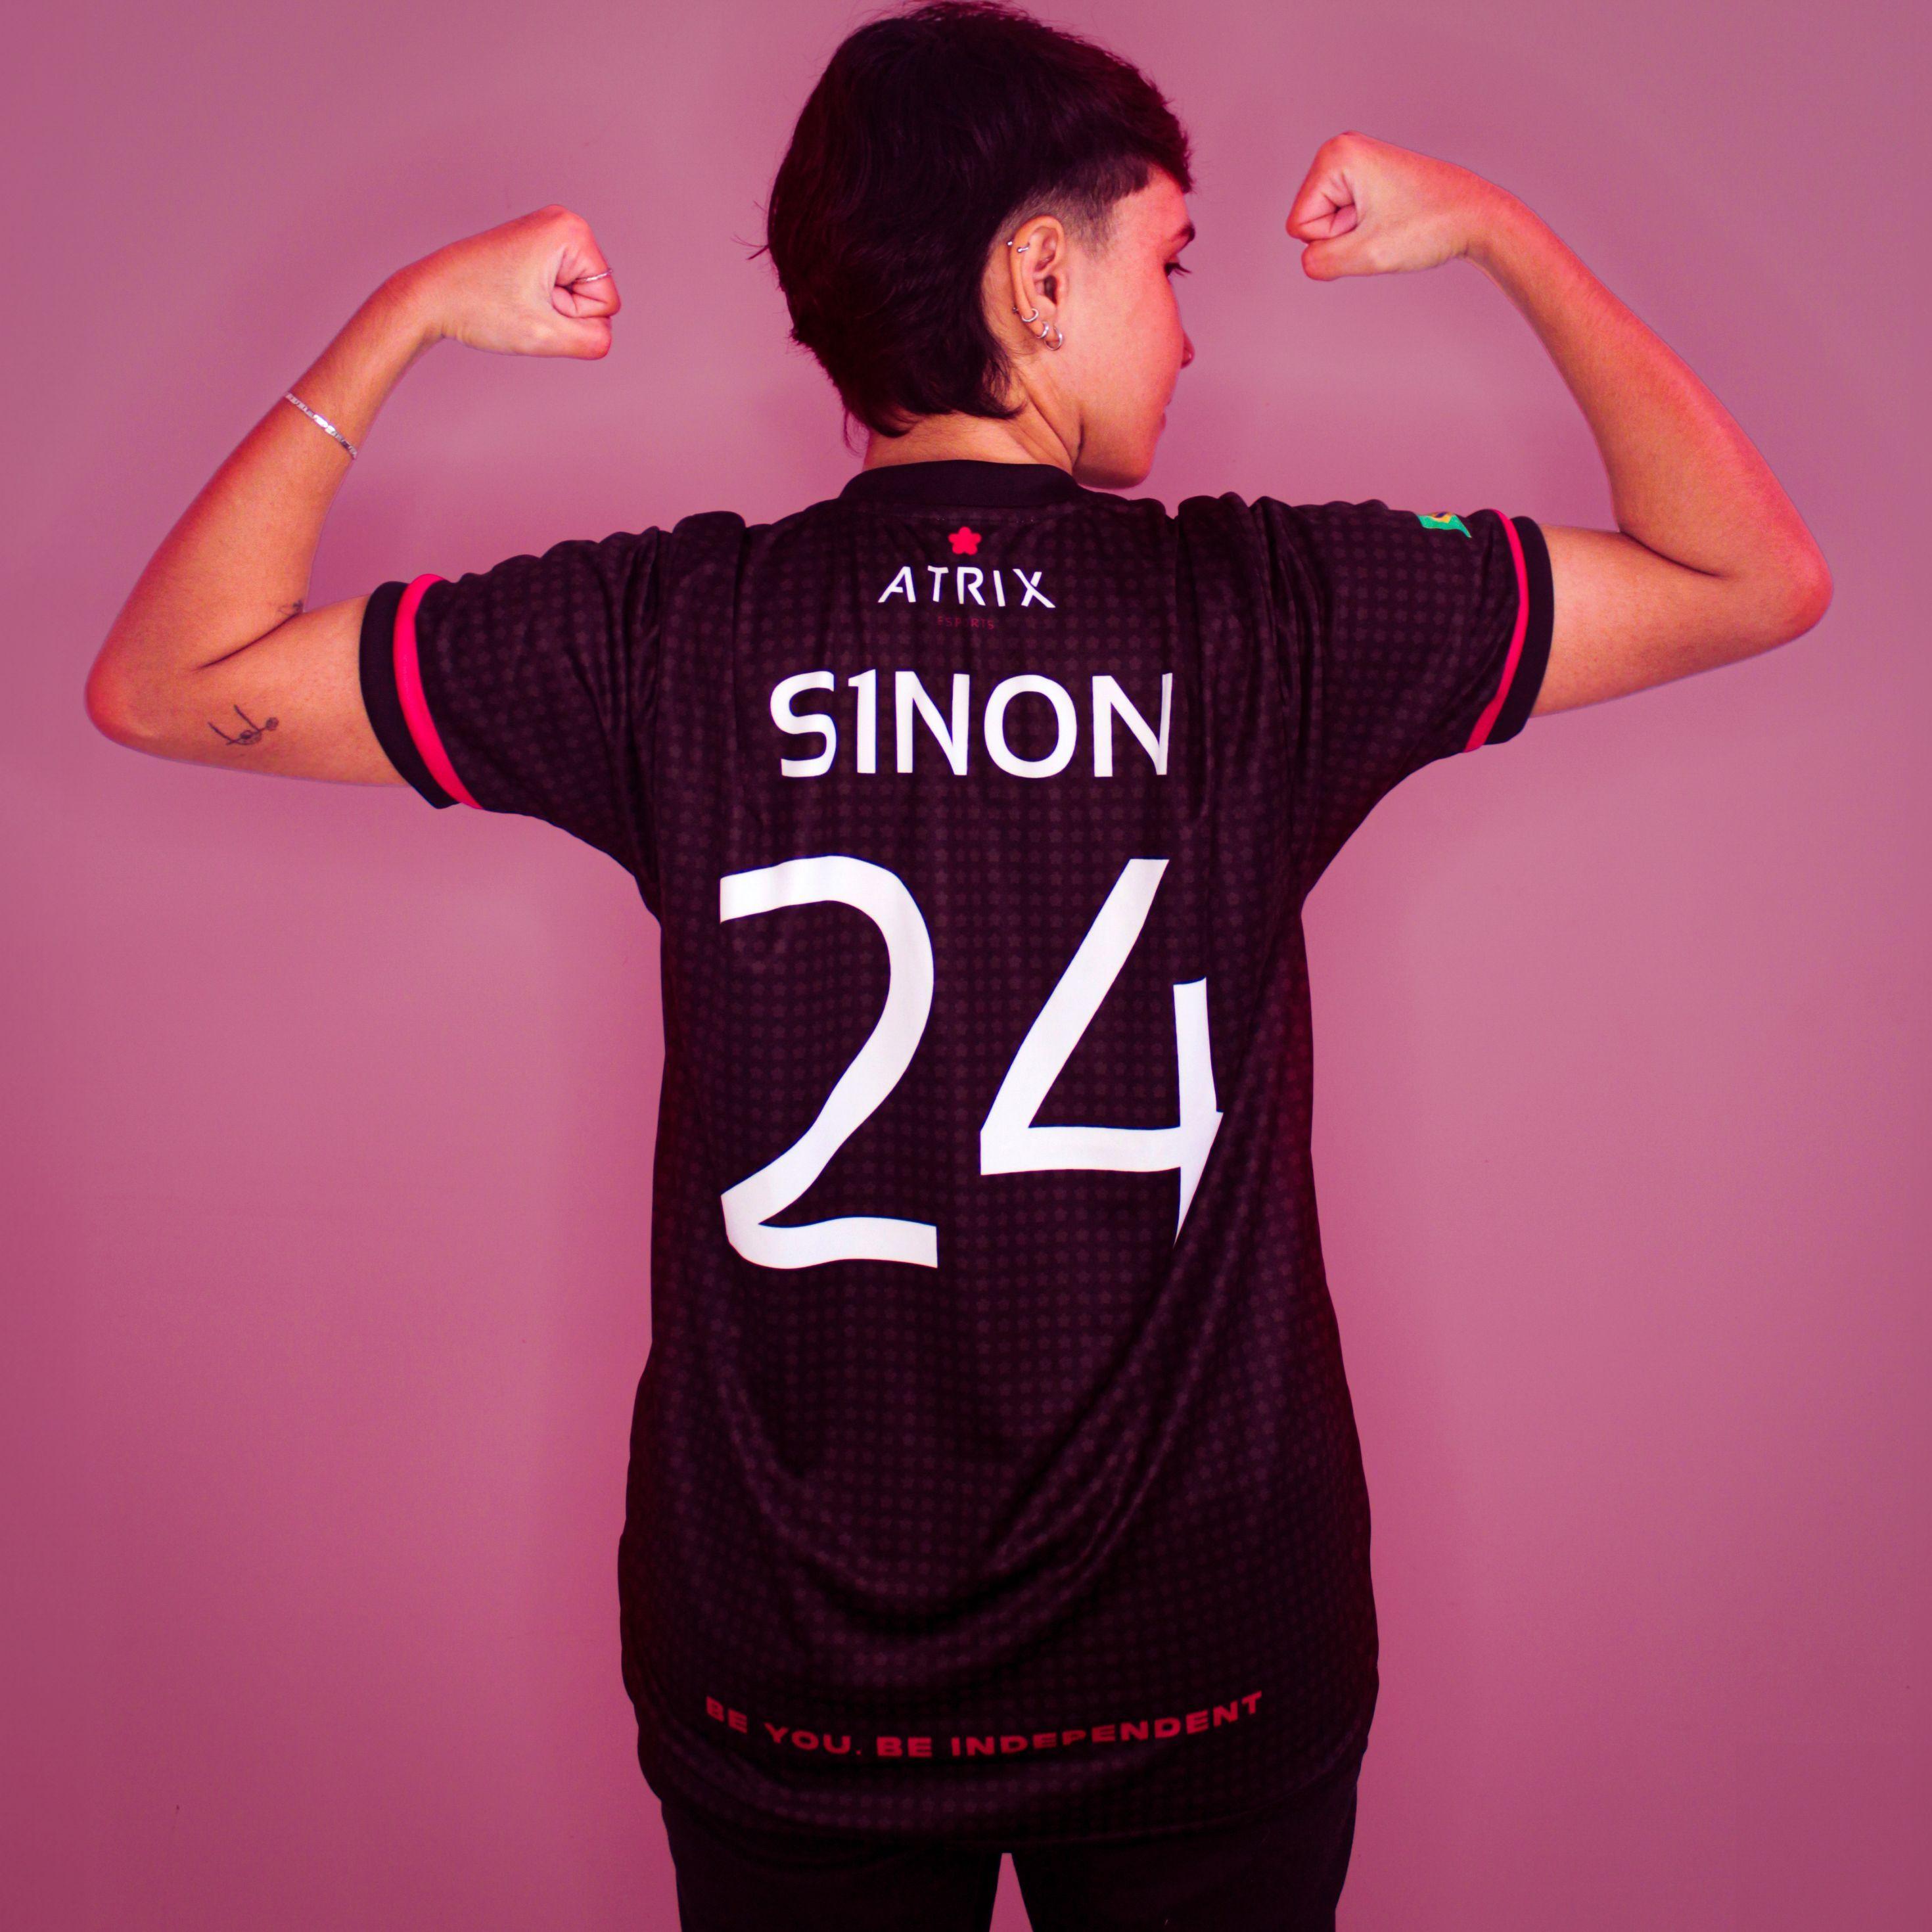 Player -S1non avatar